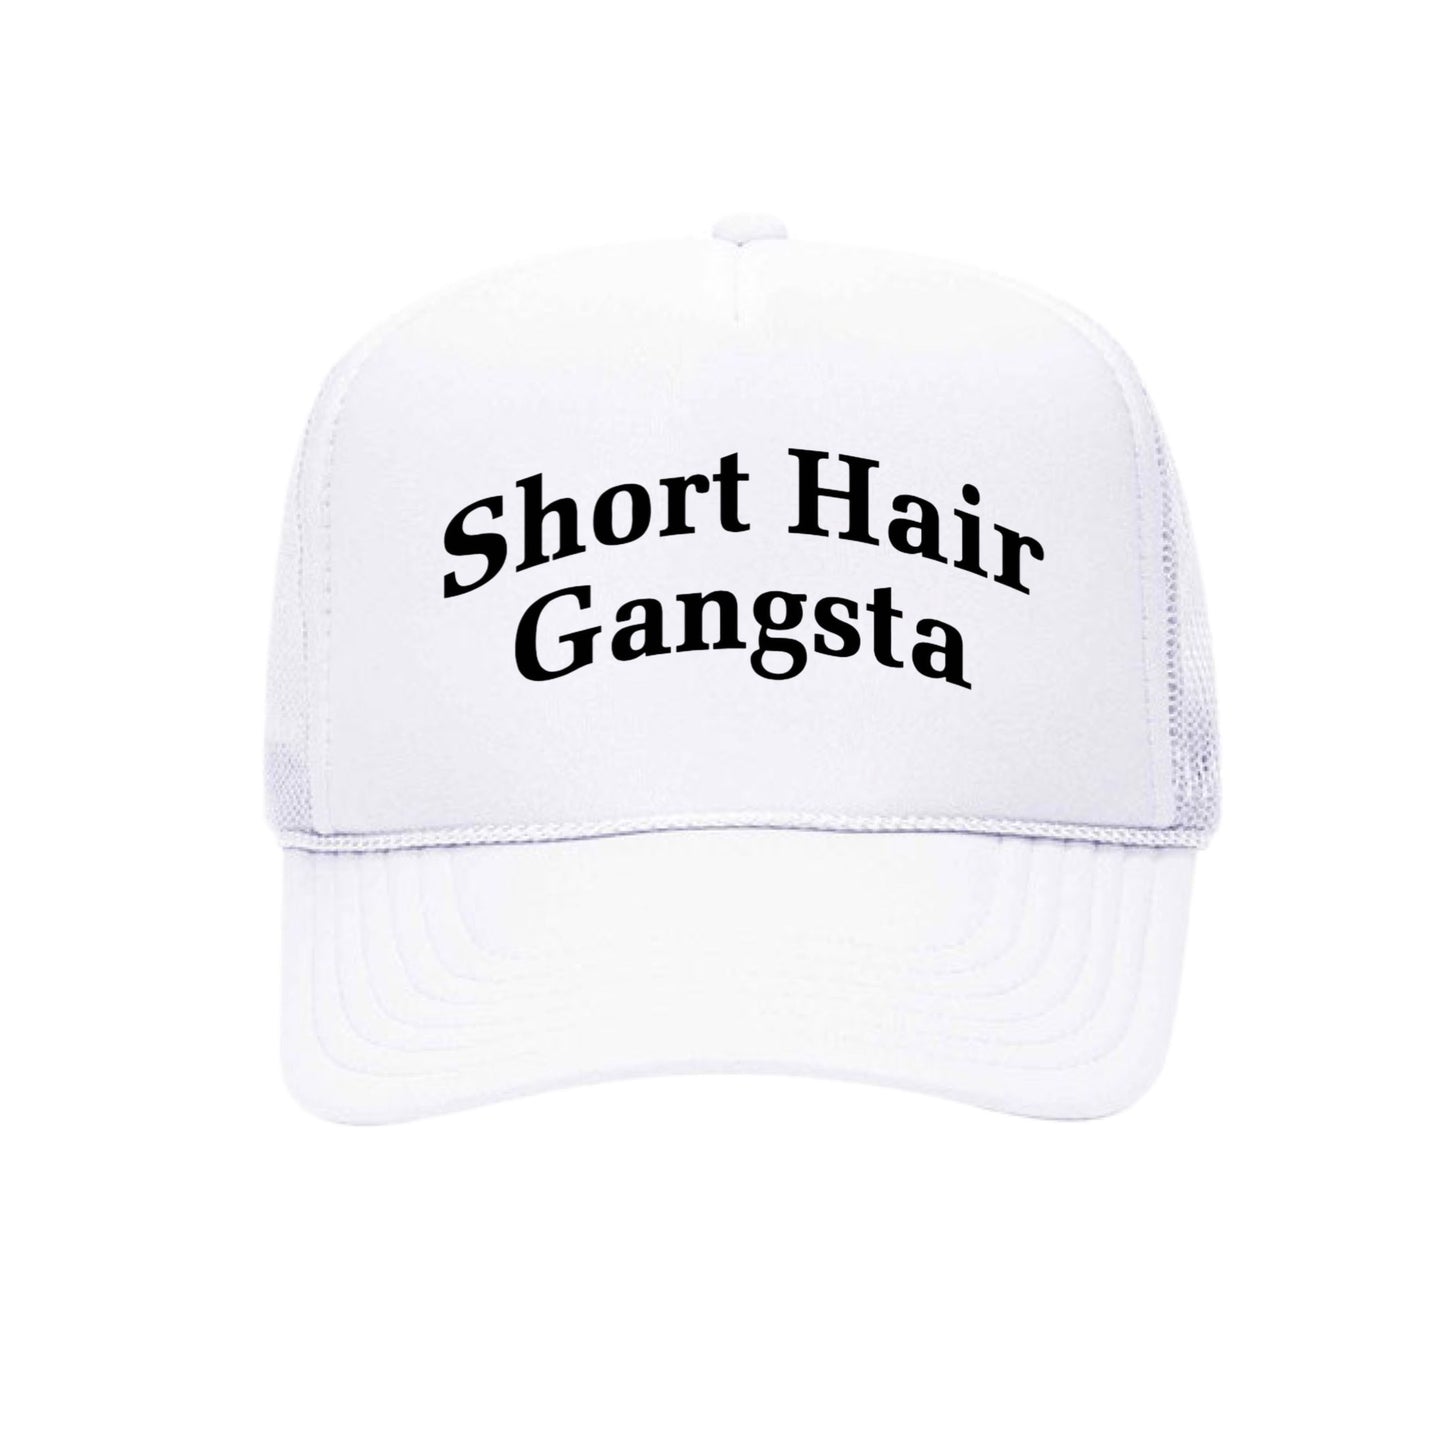 Short Hair Gangsta Trucker Hat